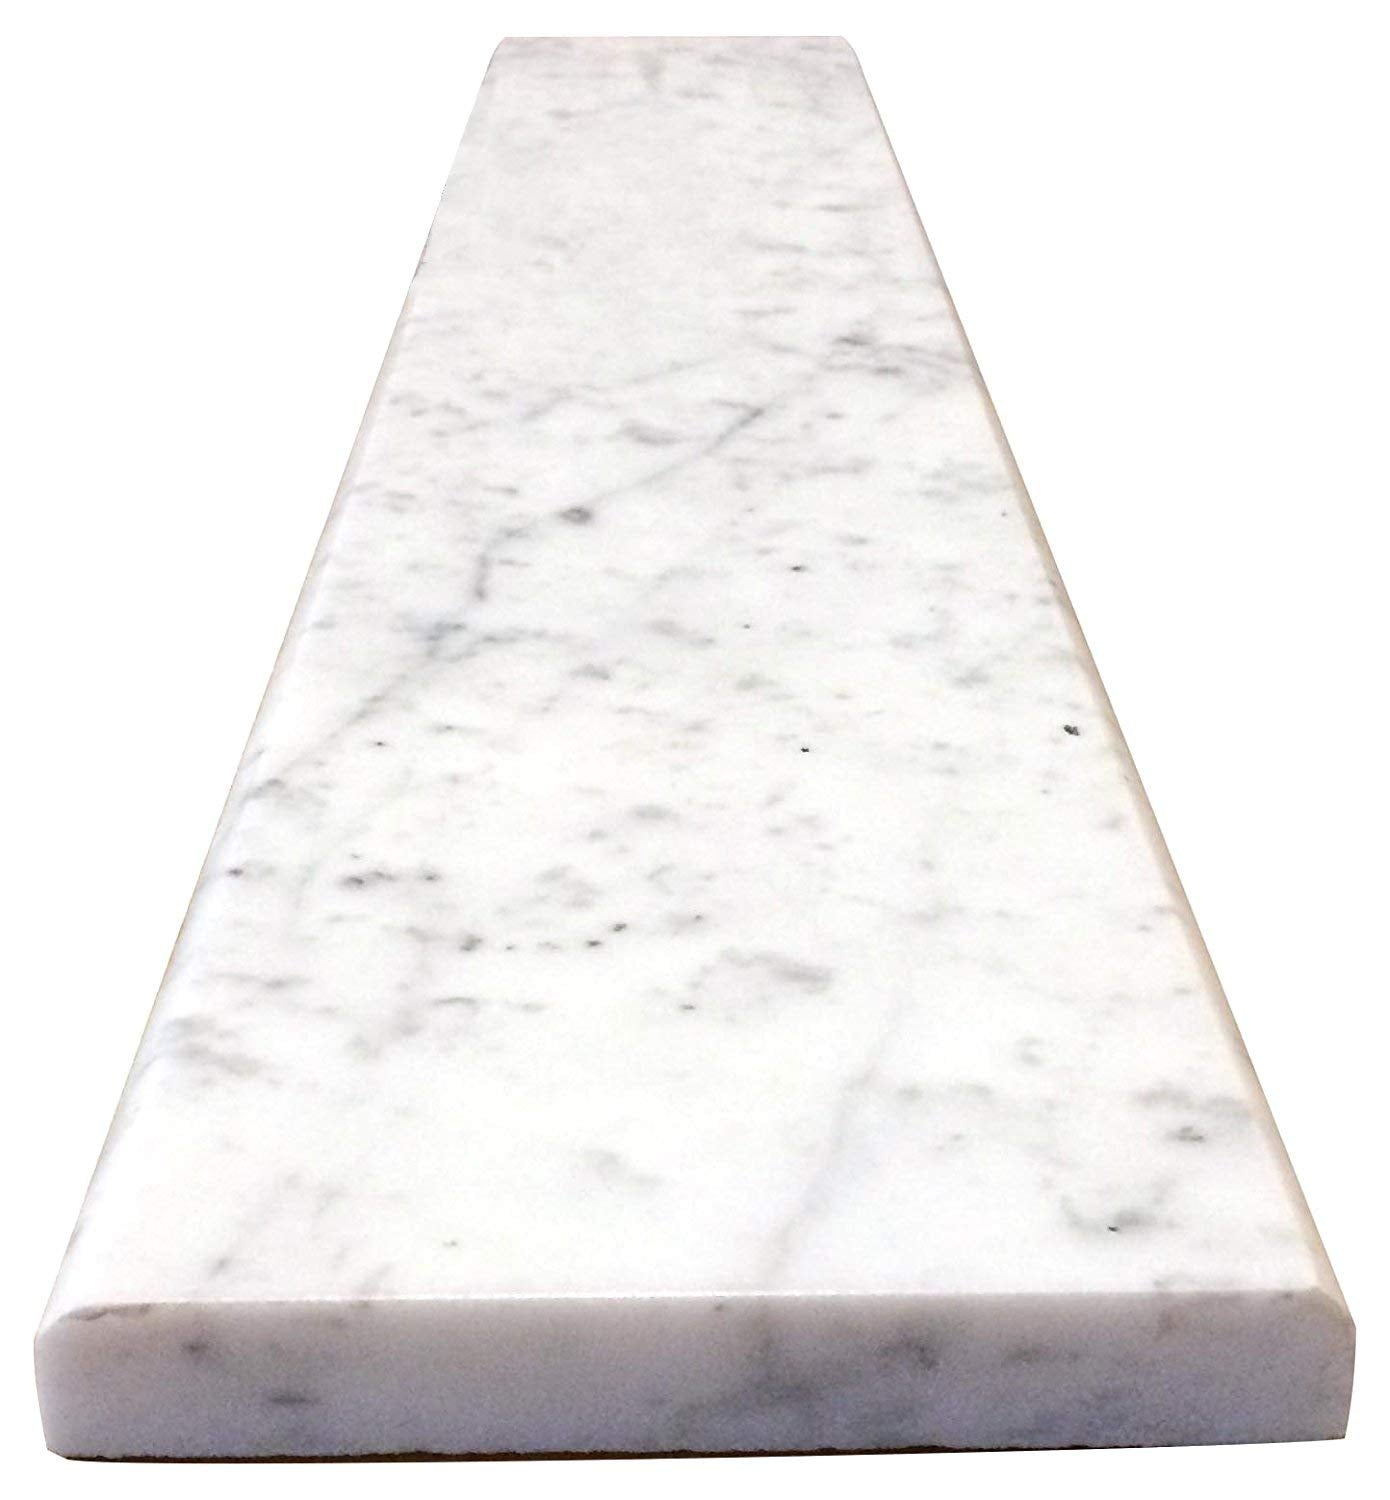 Carrara Marble Doorway Floor Threshold (Marble Saddle) Honed for Shower Curb, Vanity Backsplash